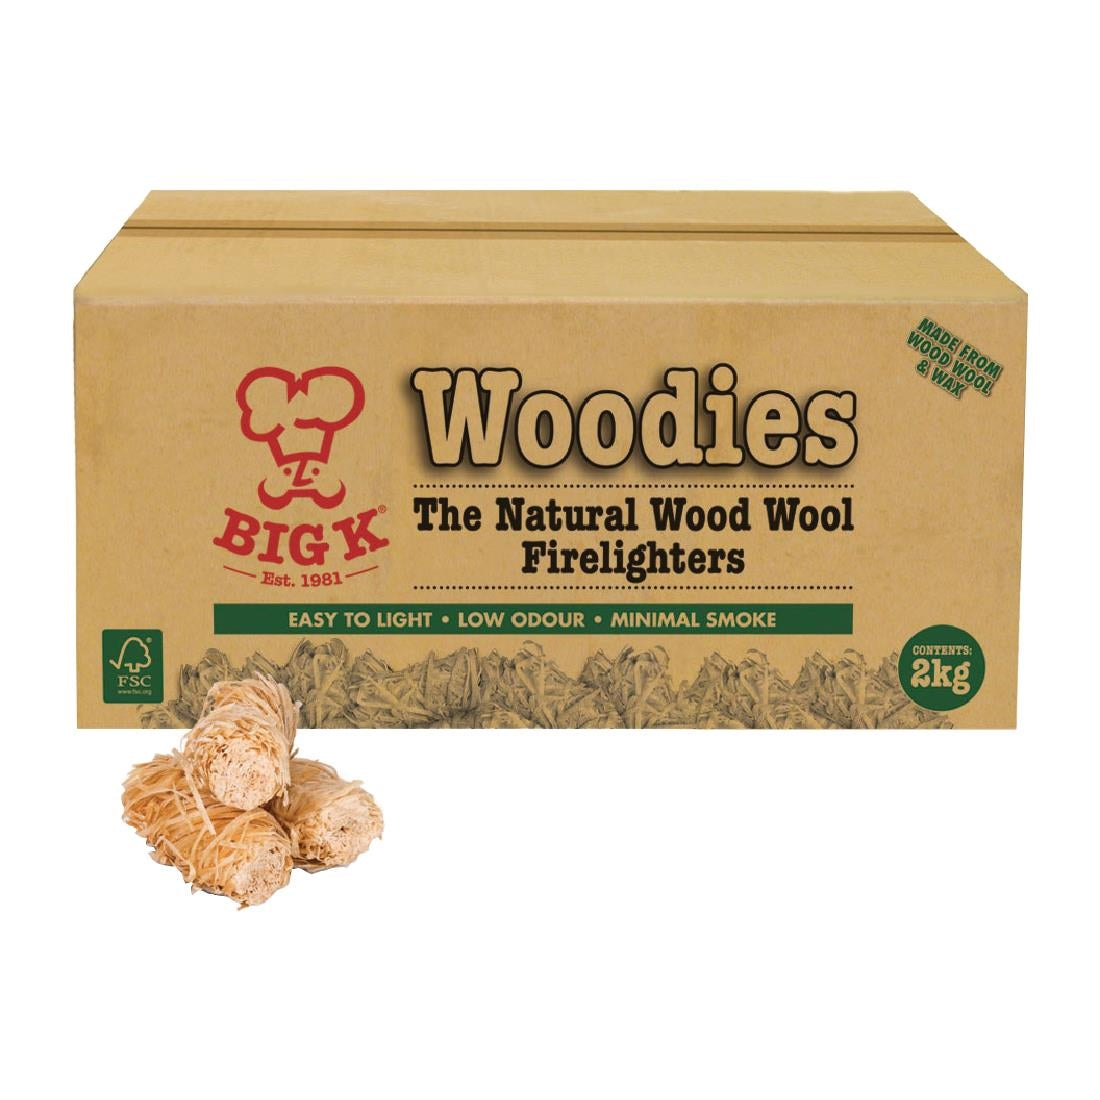 Big K Woodies Natural Wood Wool Firelighters FSC 2Kg JD Catering Equipment Solutions Ltd